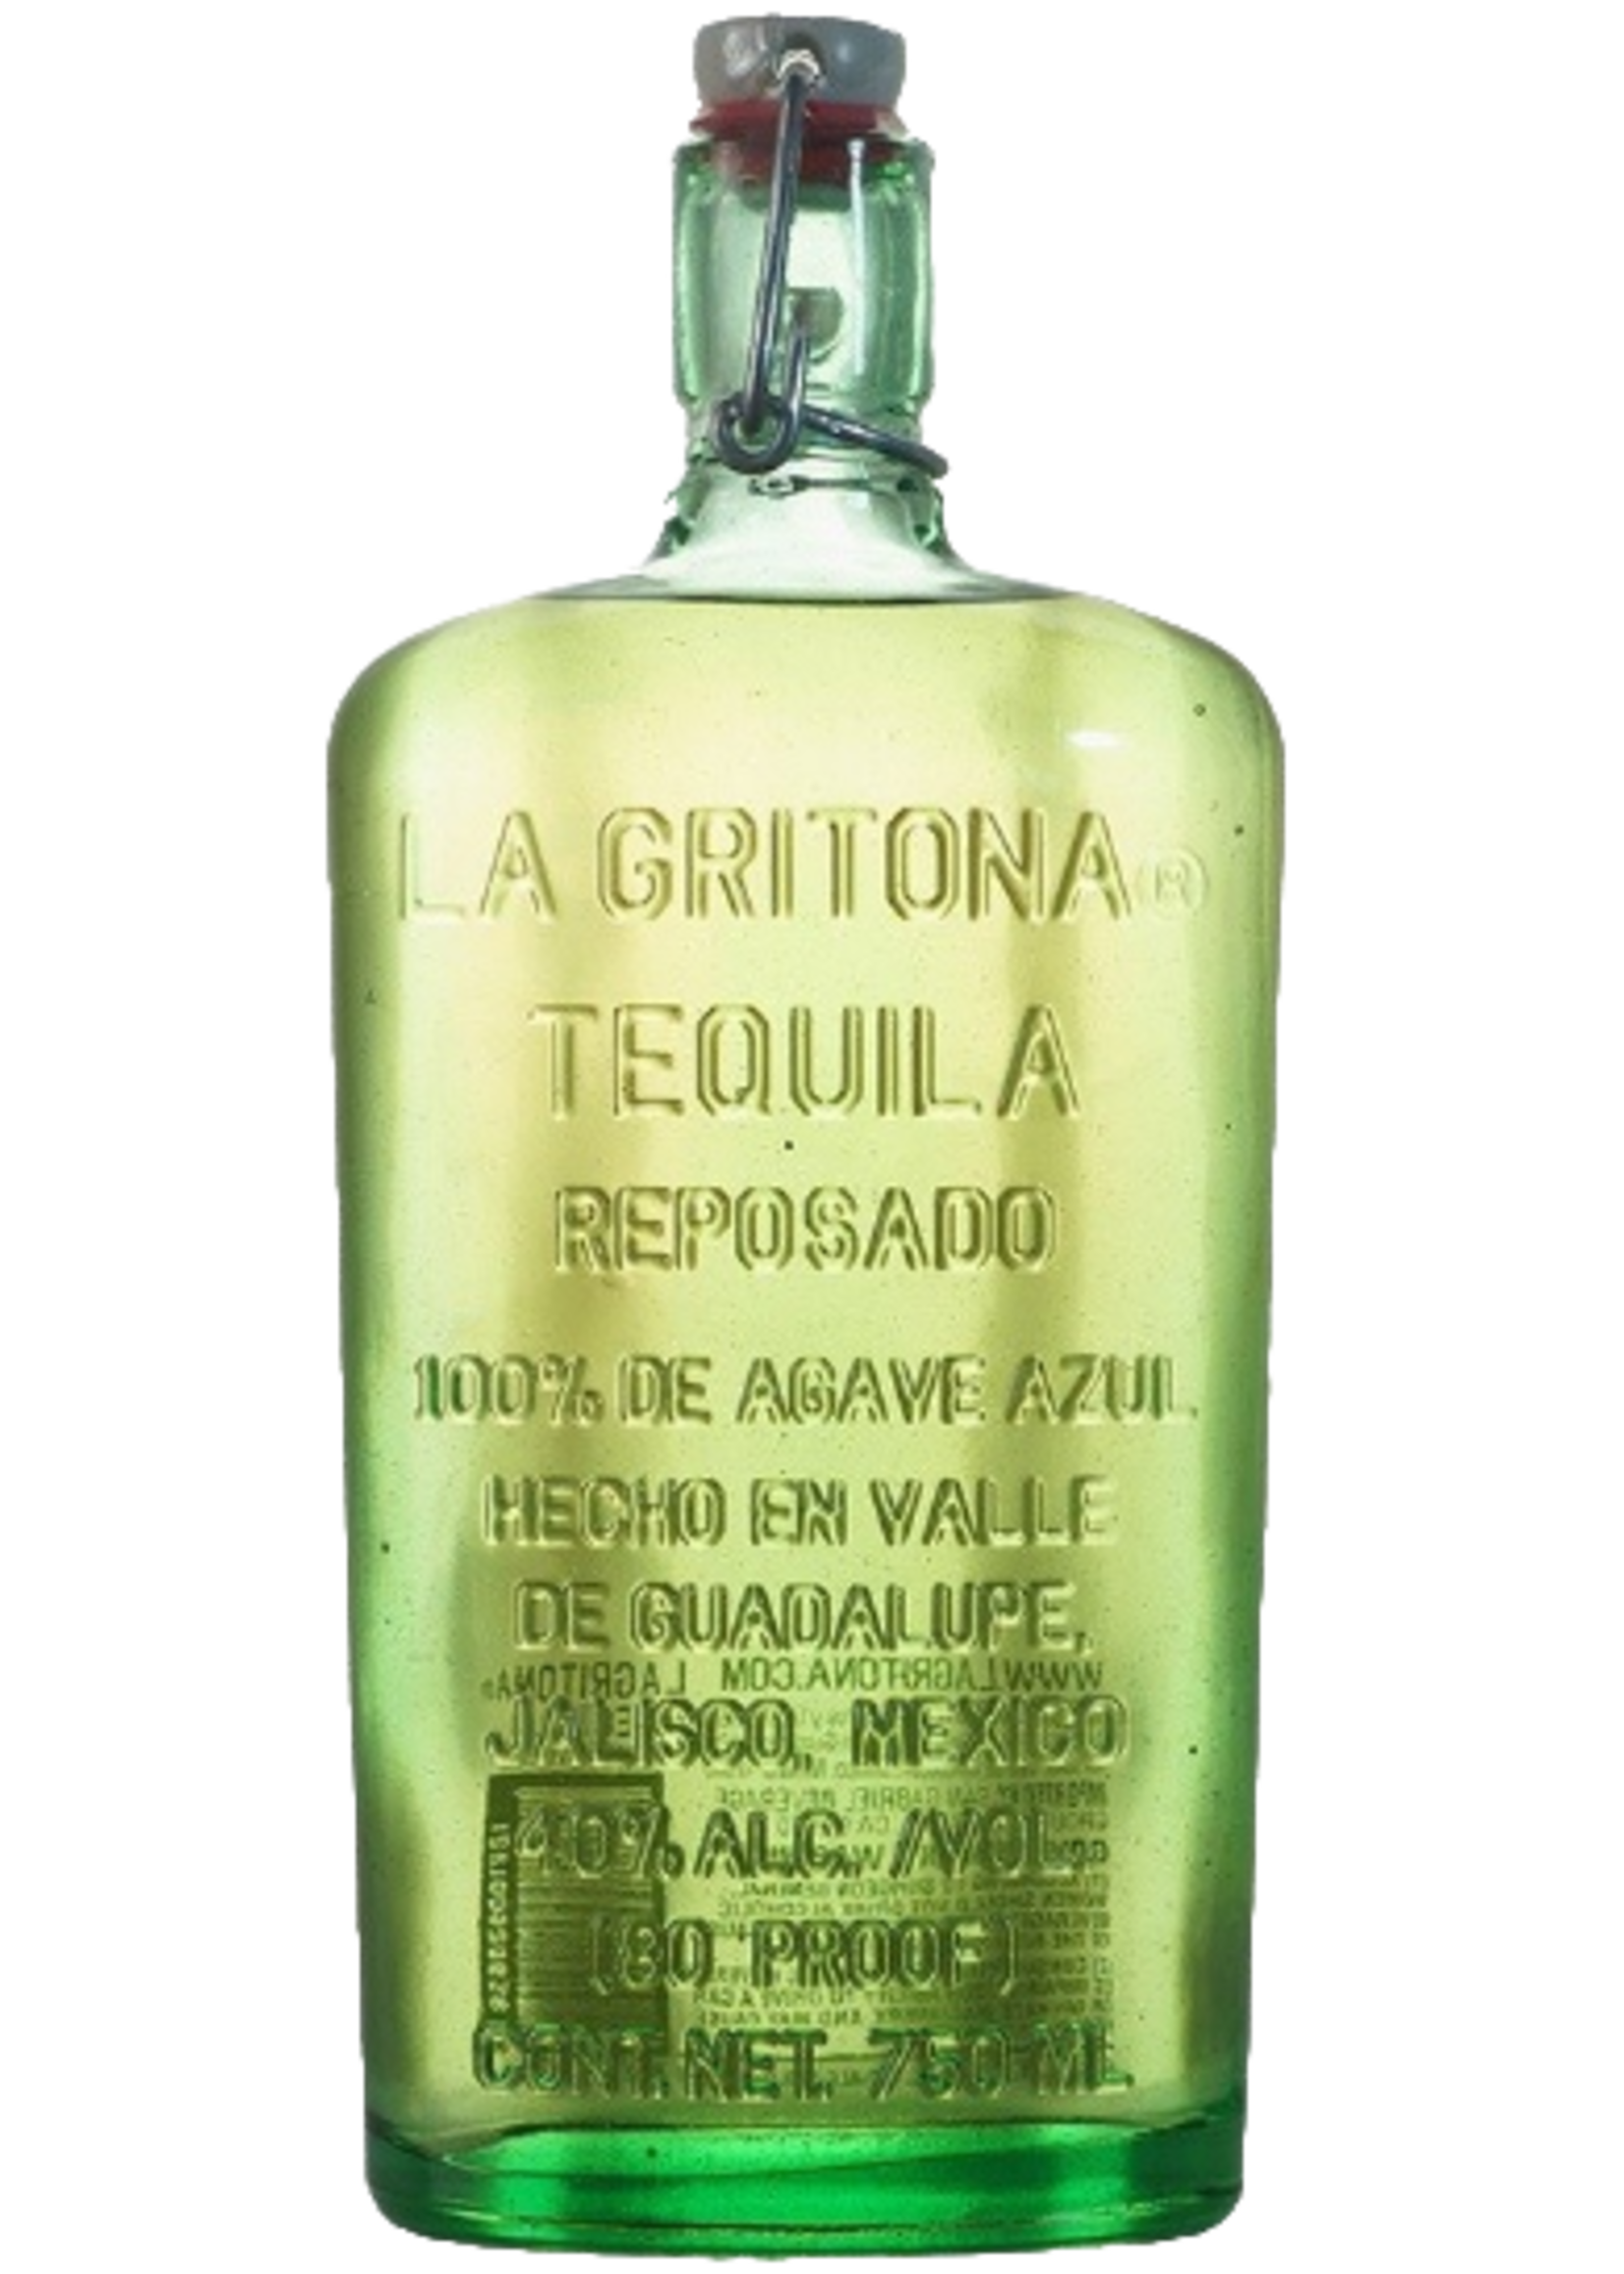 La Gritona La Gritona / Reposado Tequila 100% de Agave